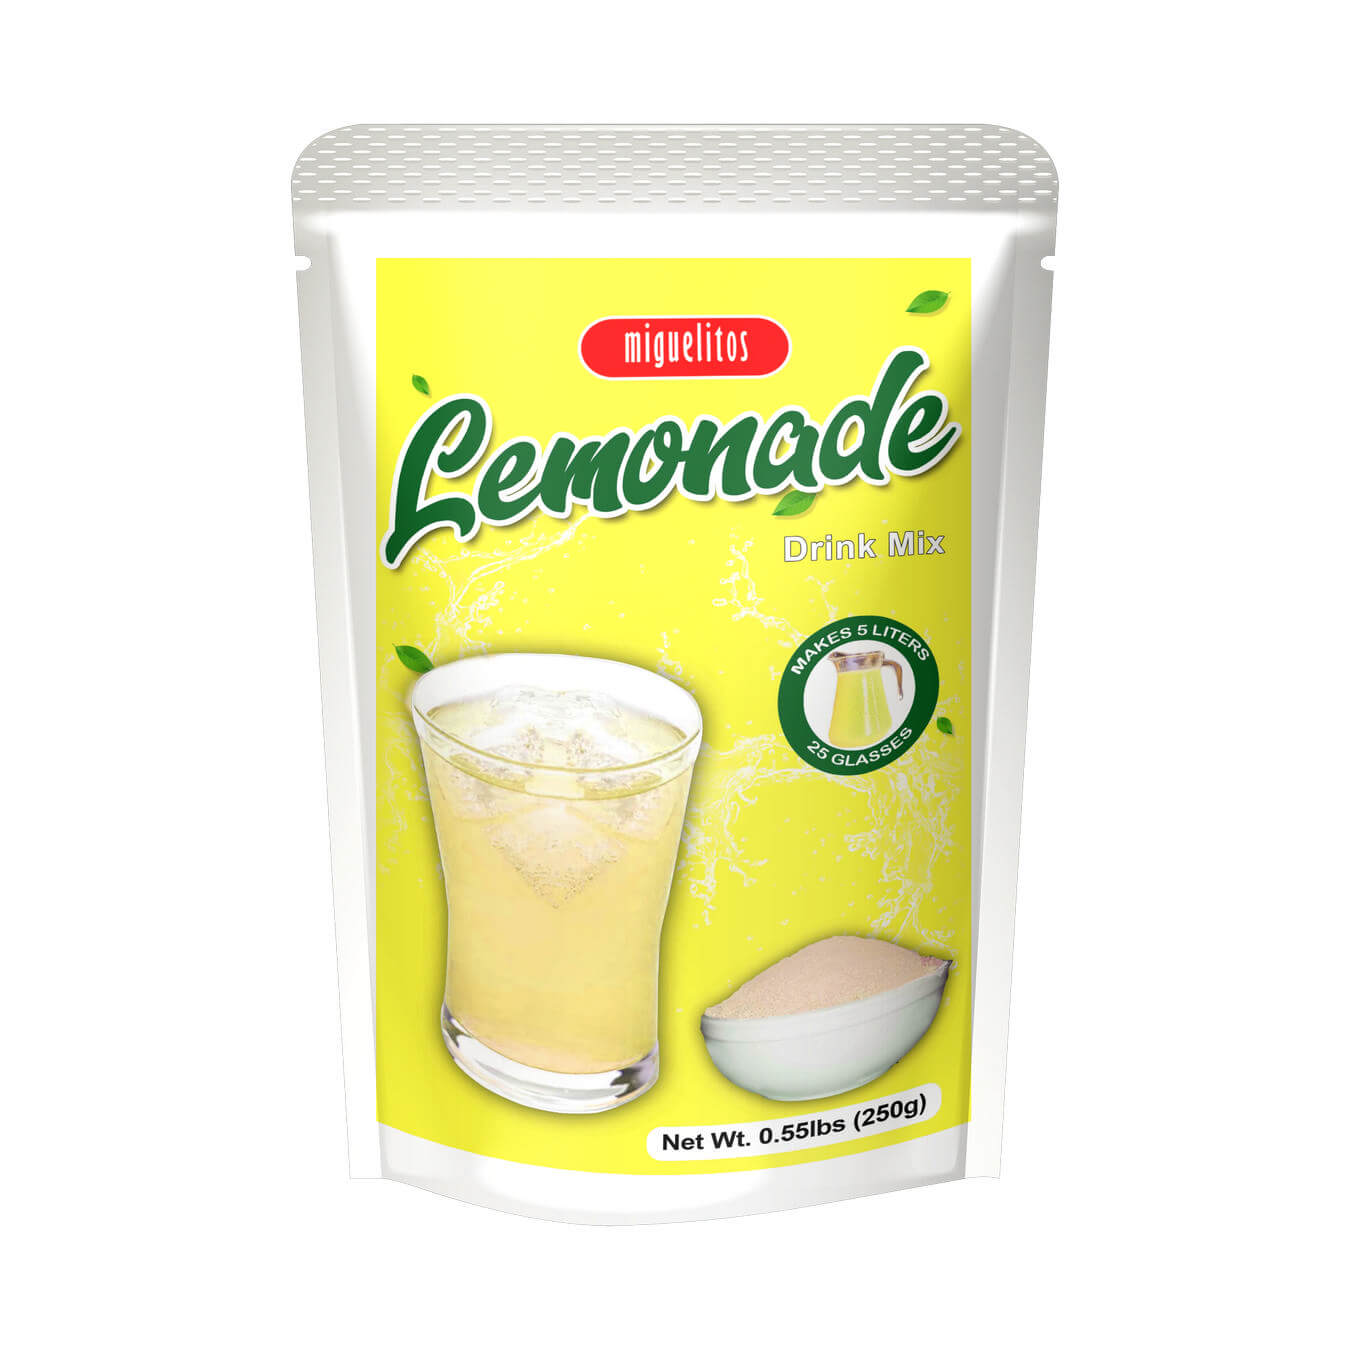 Lemonde